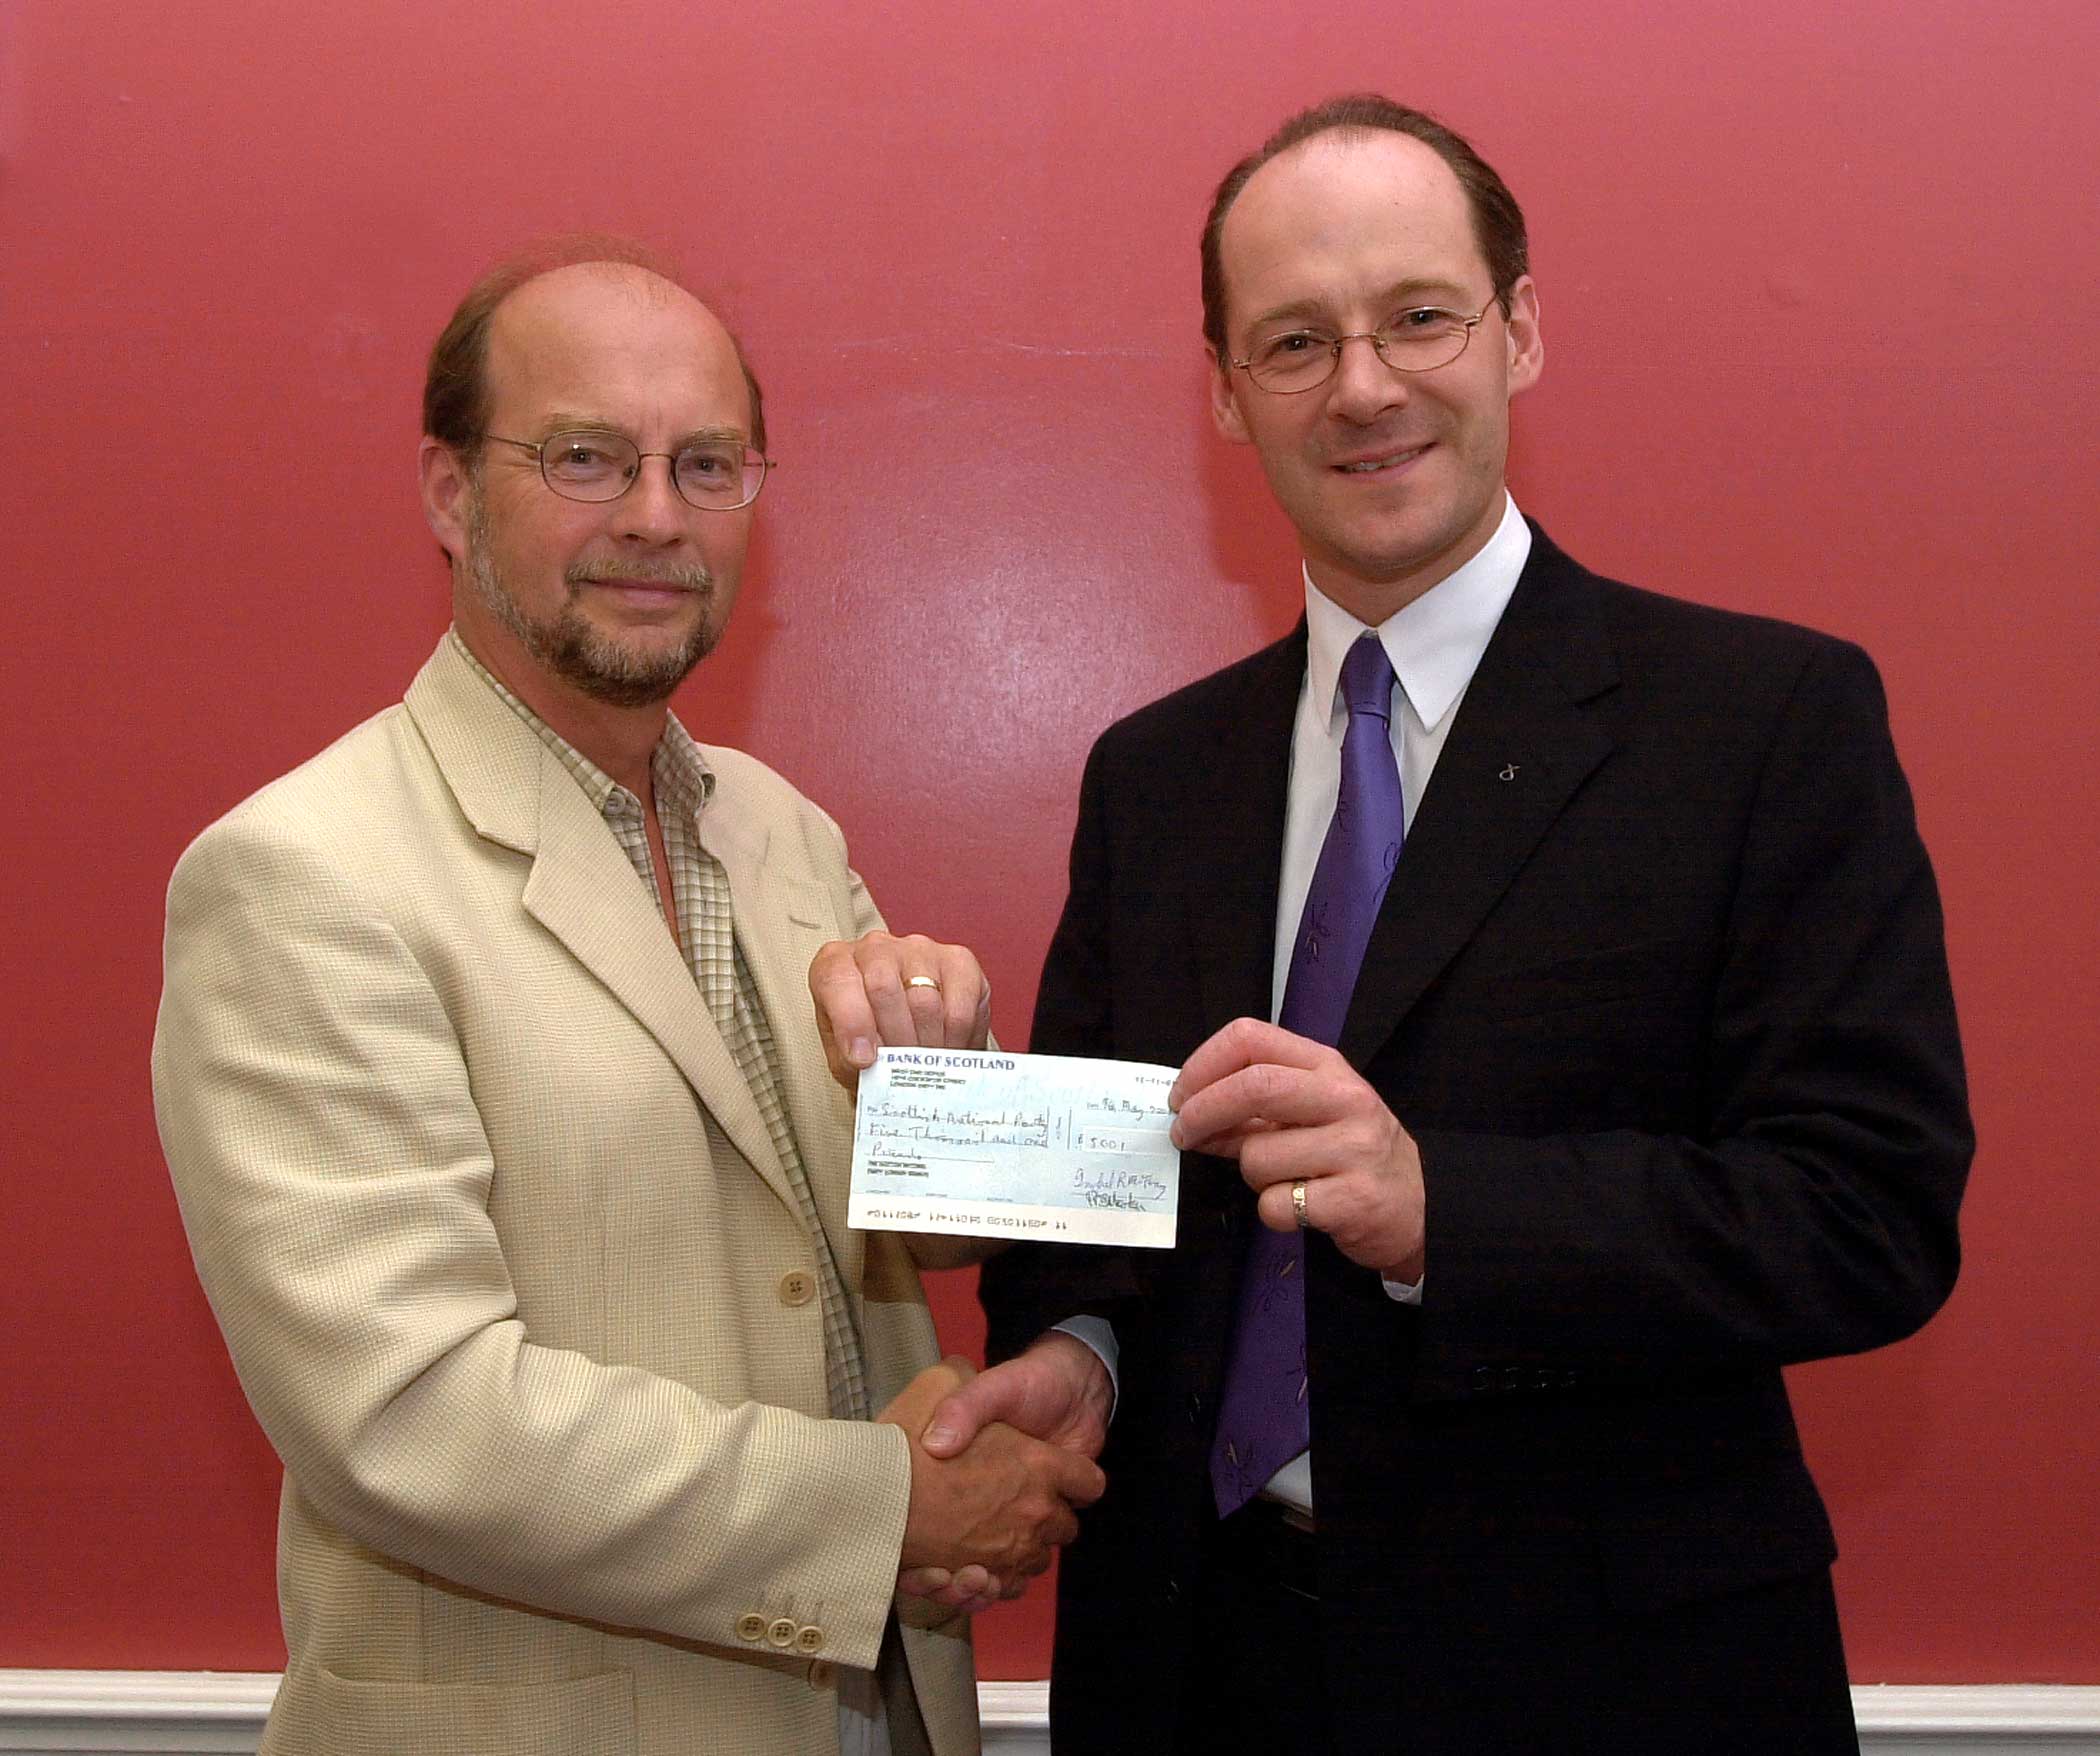 John Green presents cheque to John Swinney